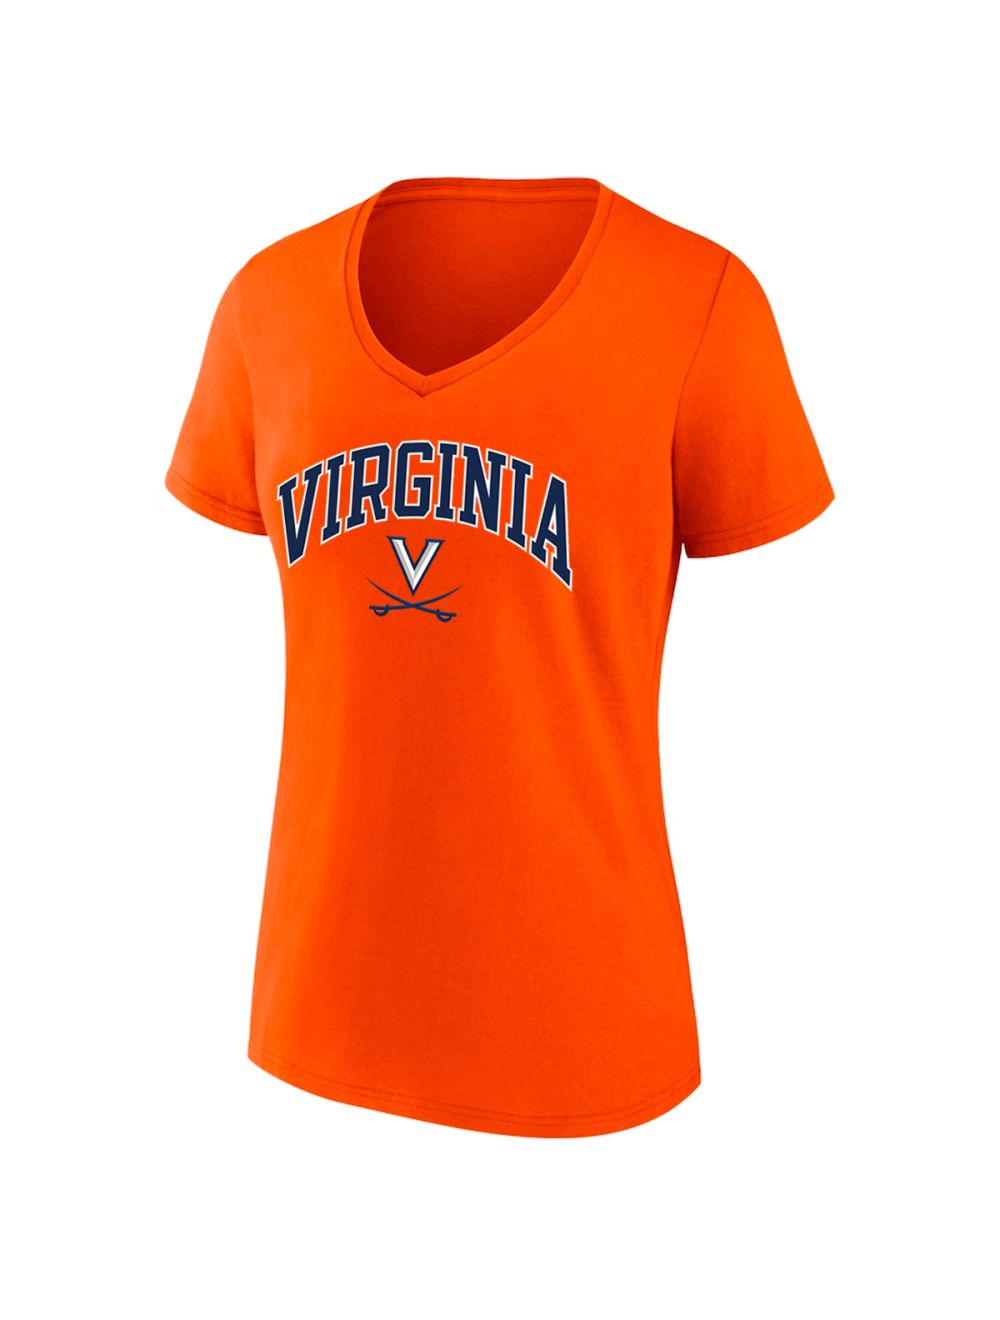 https://mincers.com/media/catalog/product/cache/33958134c3eee94557aec7c86a48adbc/rdi/rdi/47-brand-ladies-orange-v-neck-t-shirt-47-brand-817-or-womens-vneck_1.jpg